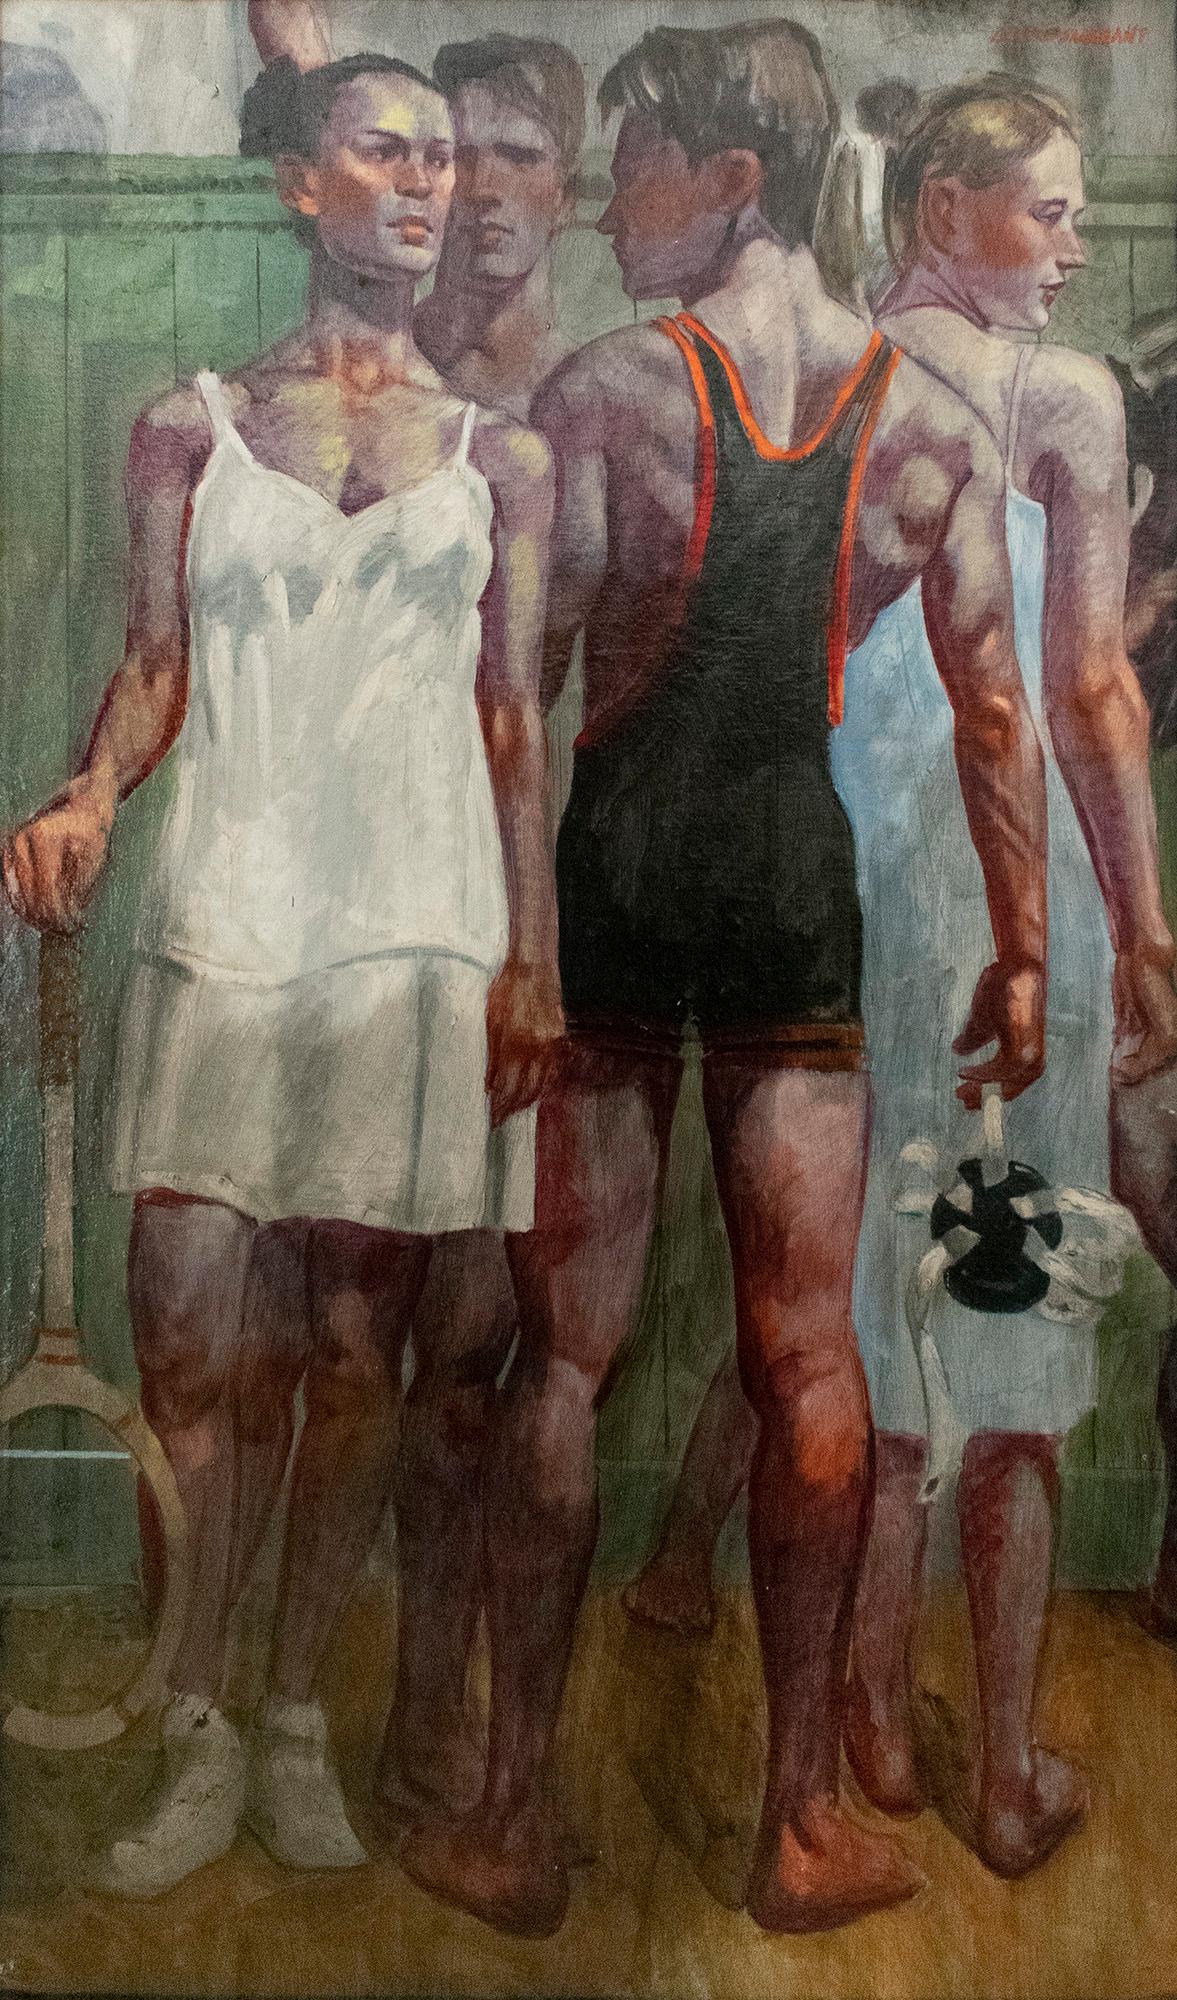 Tennis Whites & Wrestling Singlet (Figurative Oil of Athletes by Mark Beard)